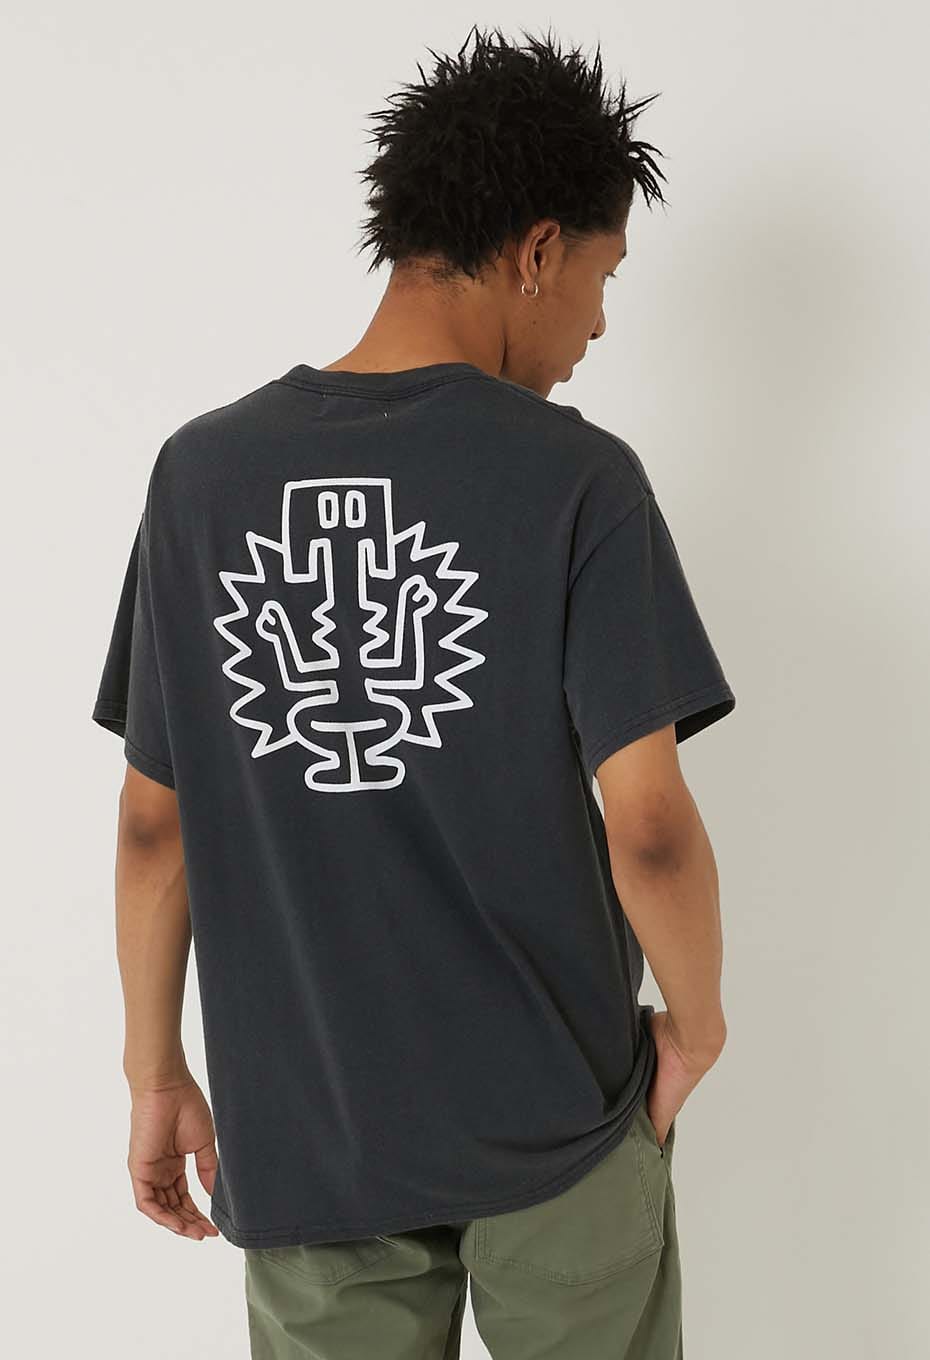 KEITH HARING|Tシャツ|Keith Haring /back logo Tシャツ